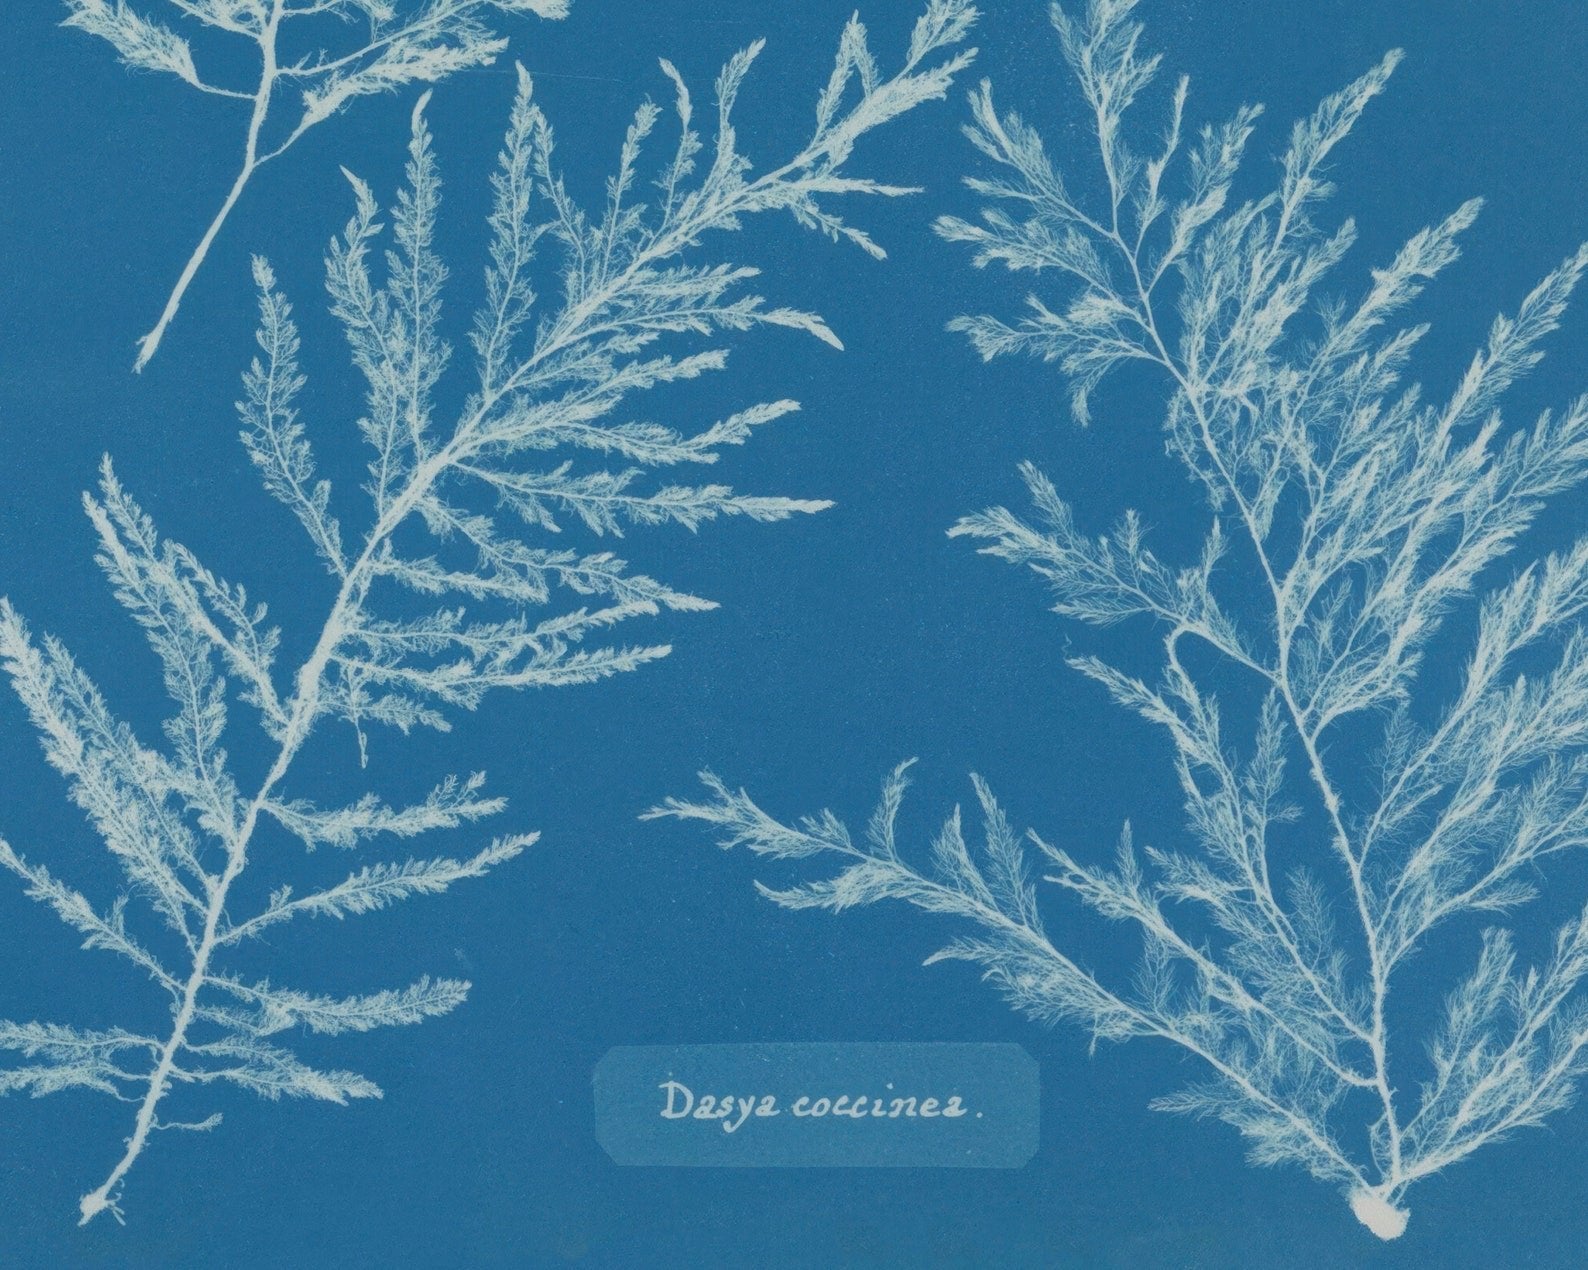 Anna Atkins "Dasya Coccinea" Vintage Botanical Cyanotype Photo (c.1853) - Mabon Gallery